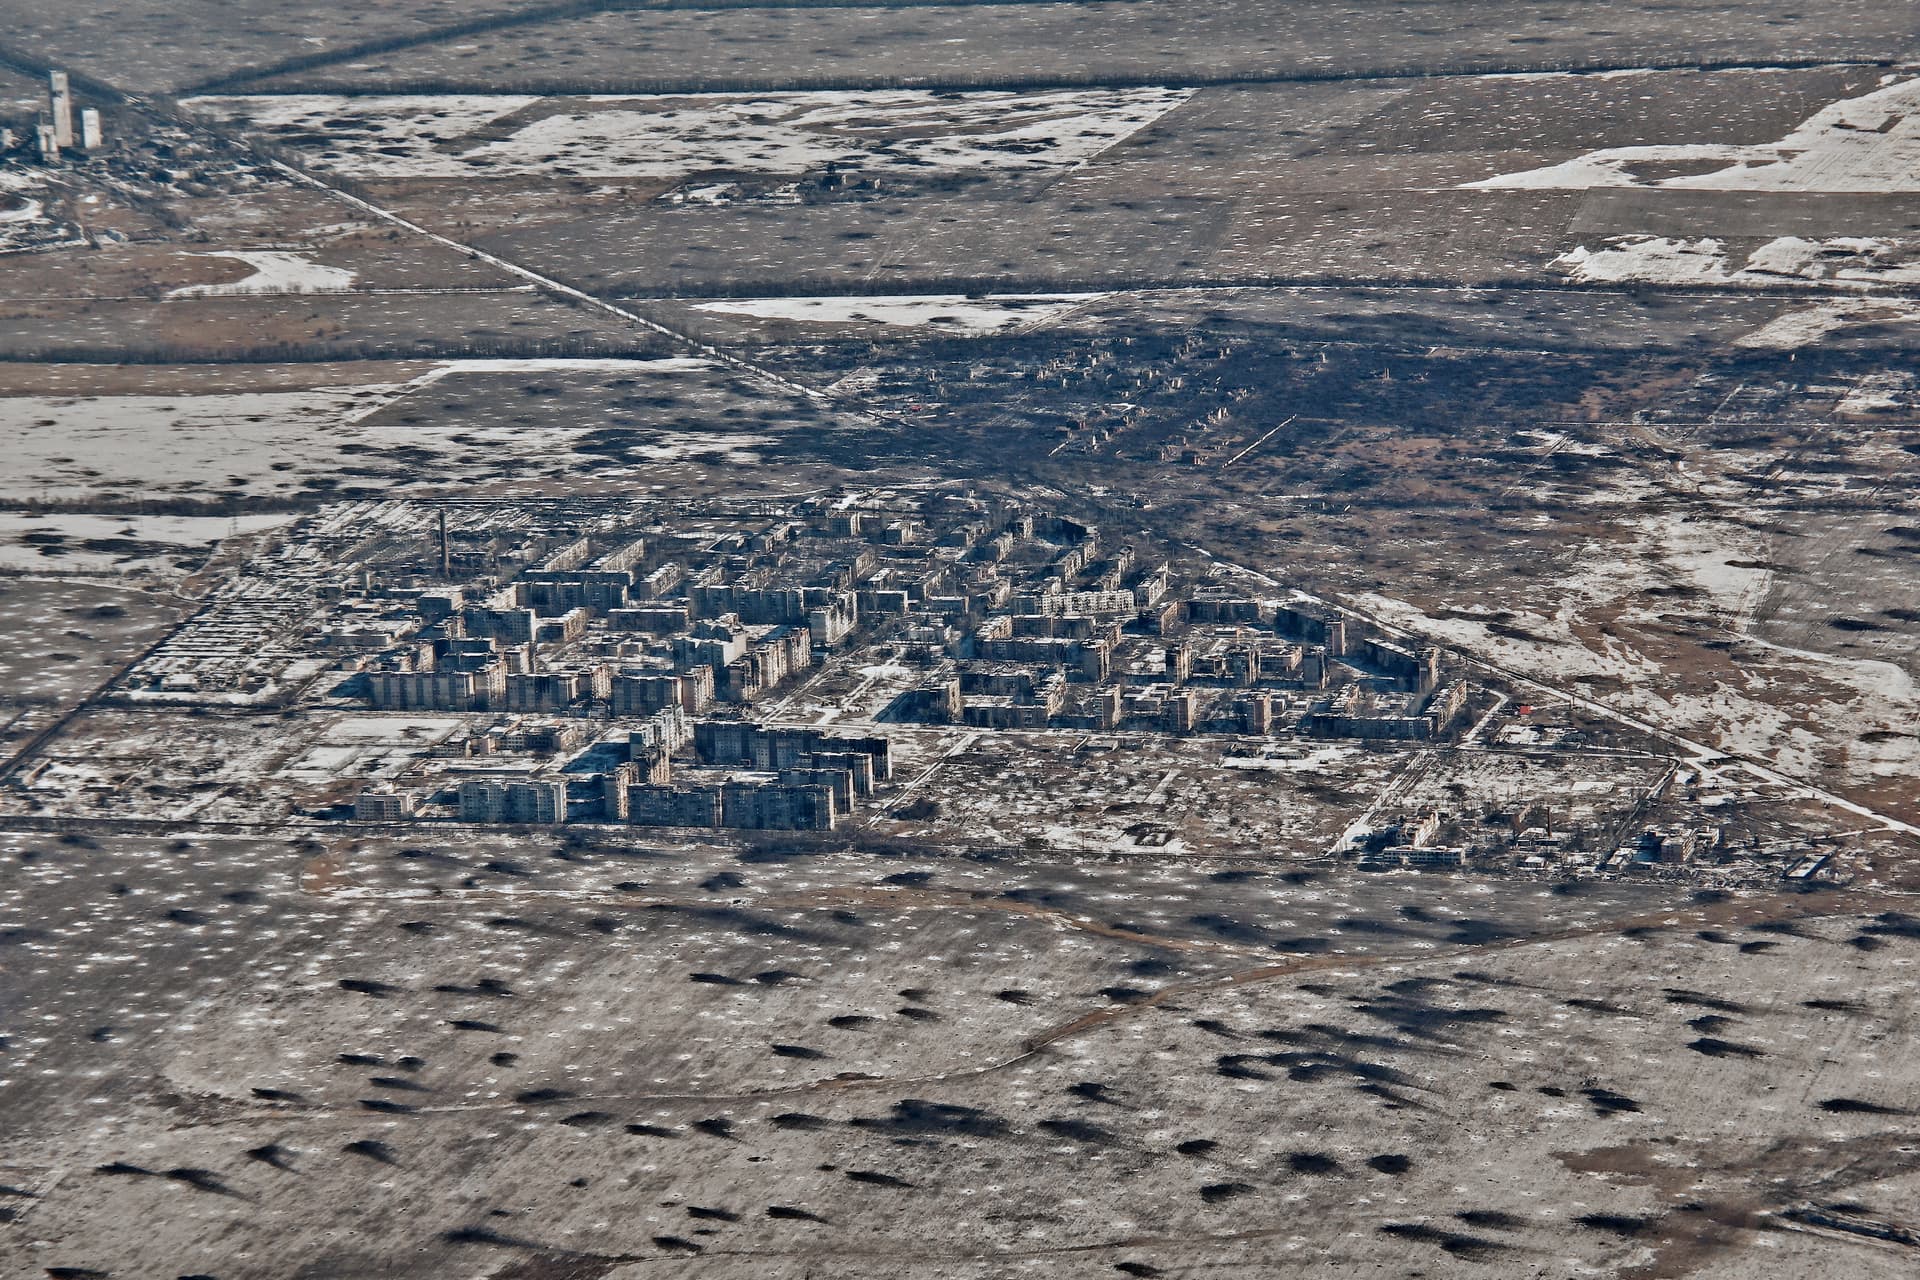 An aerial view of Vuhledar